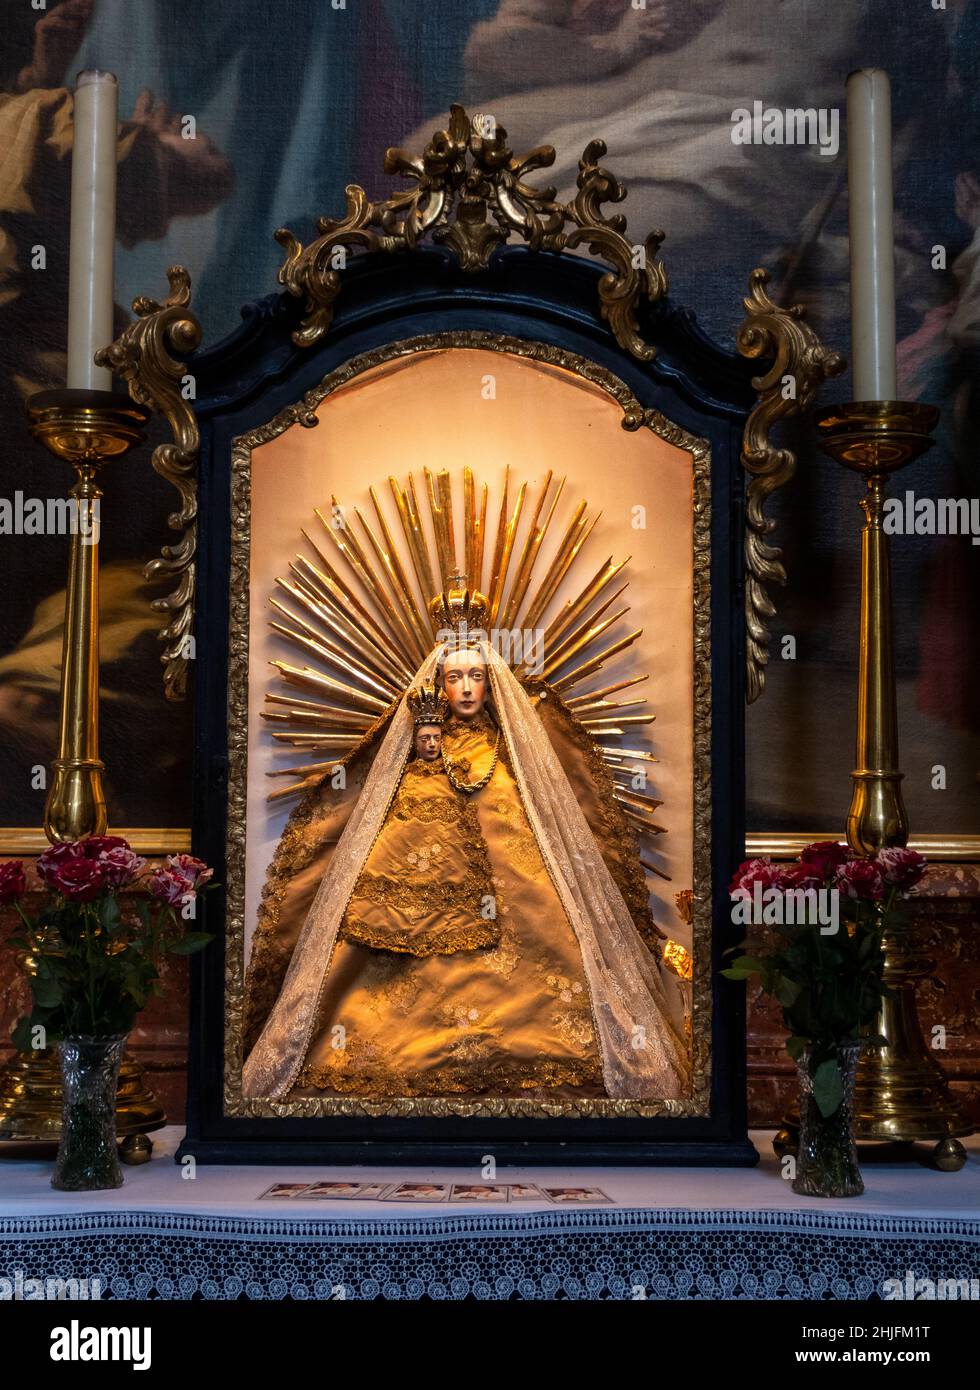 Religious icon inside the Karlskirche church in Vienna, Austria Stock Photo